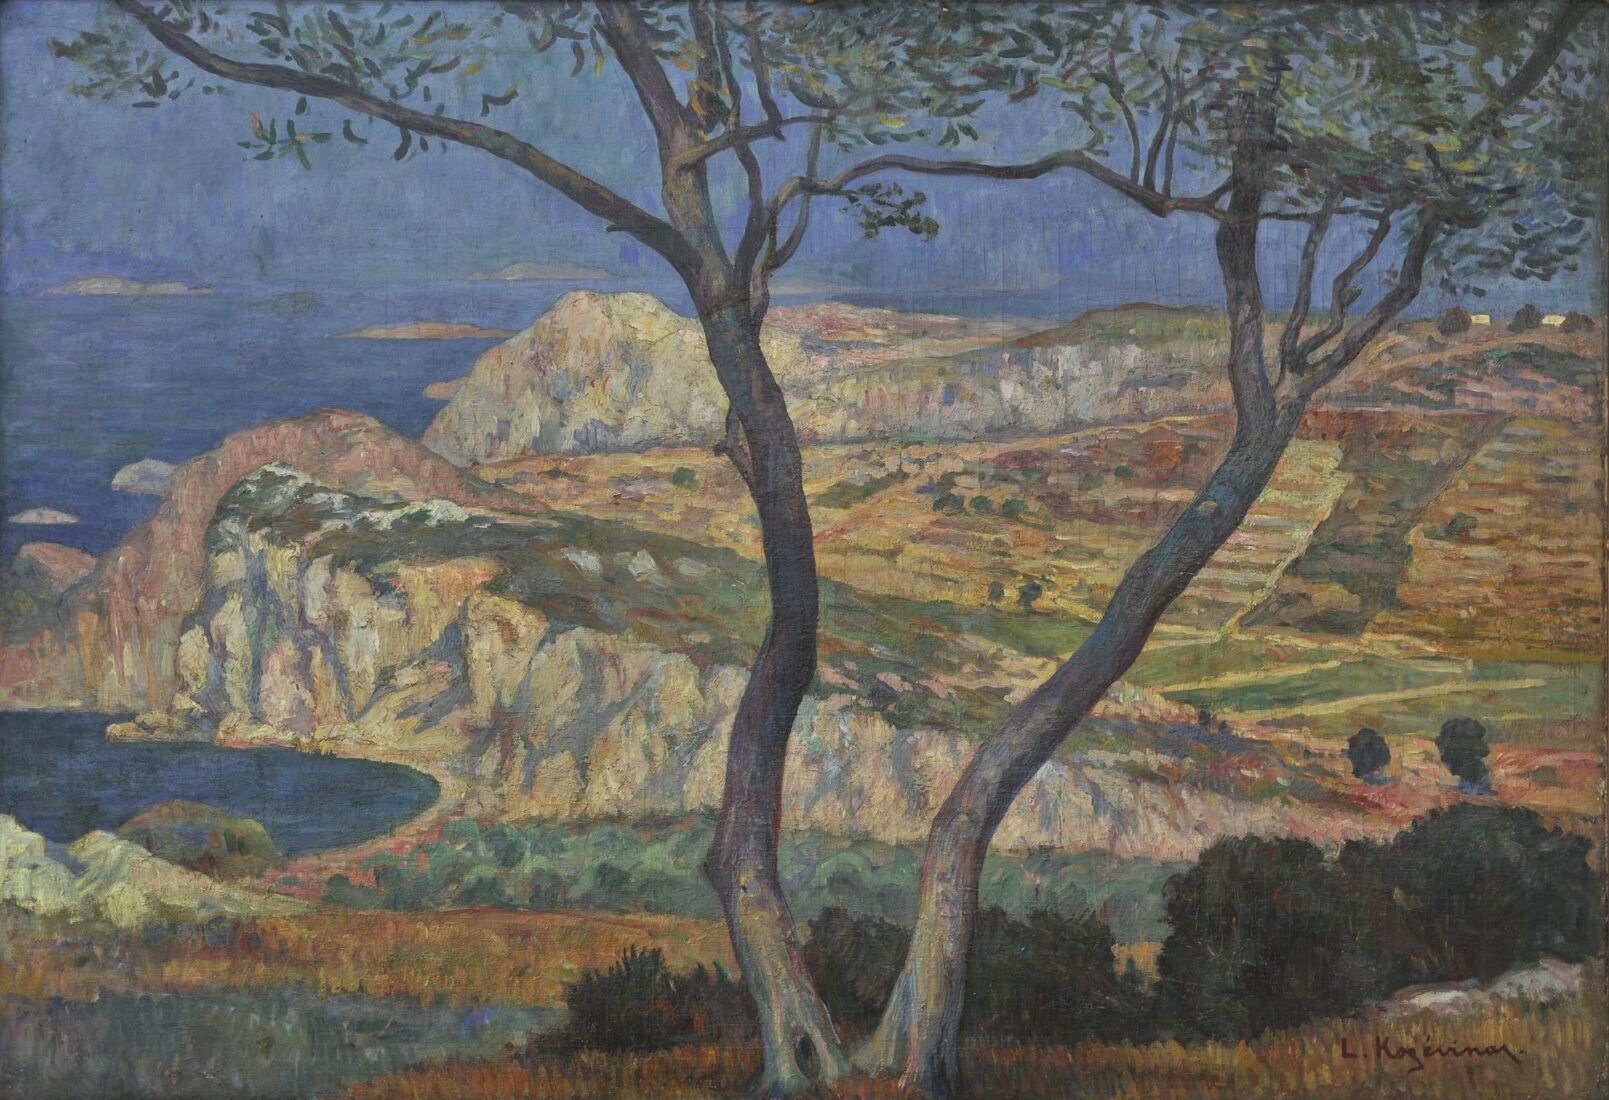 Landscape from Corfu - Kogevinas Lykourgos